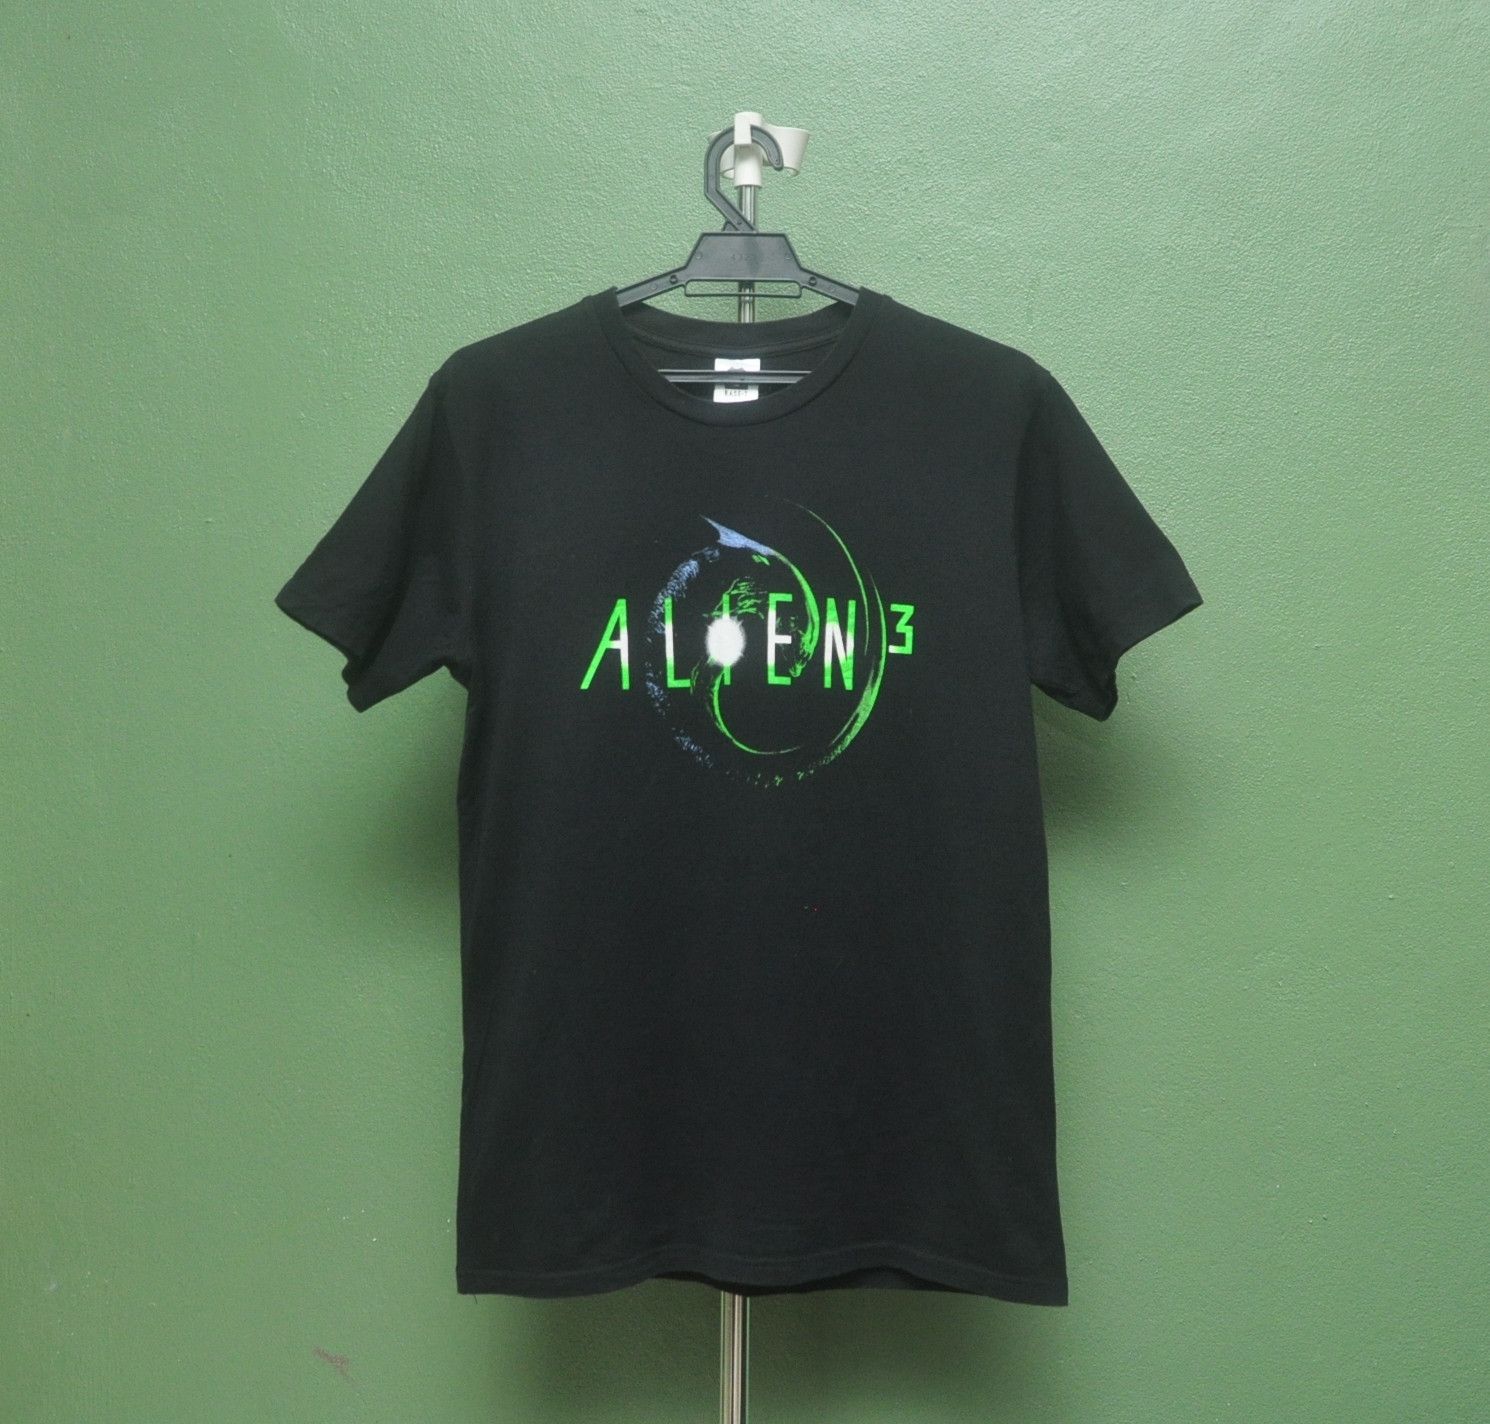 Movie Vintage Alien 3 90s Movies Big Logo Shirt Size US M / EU 48-50 / 2 - 1 Preview